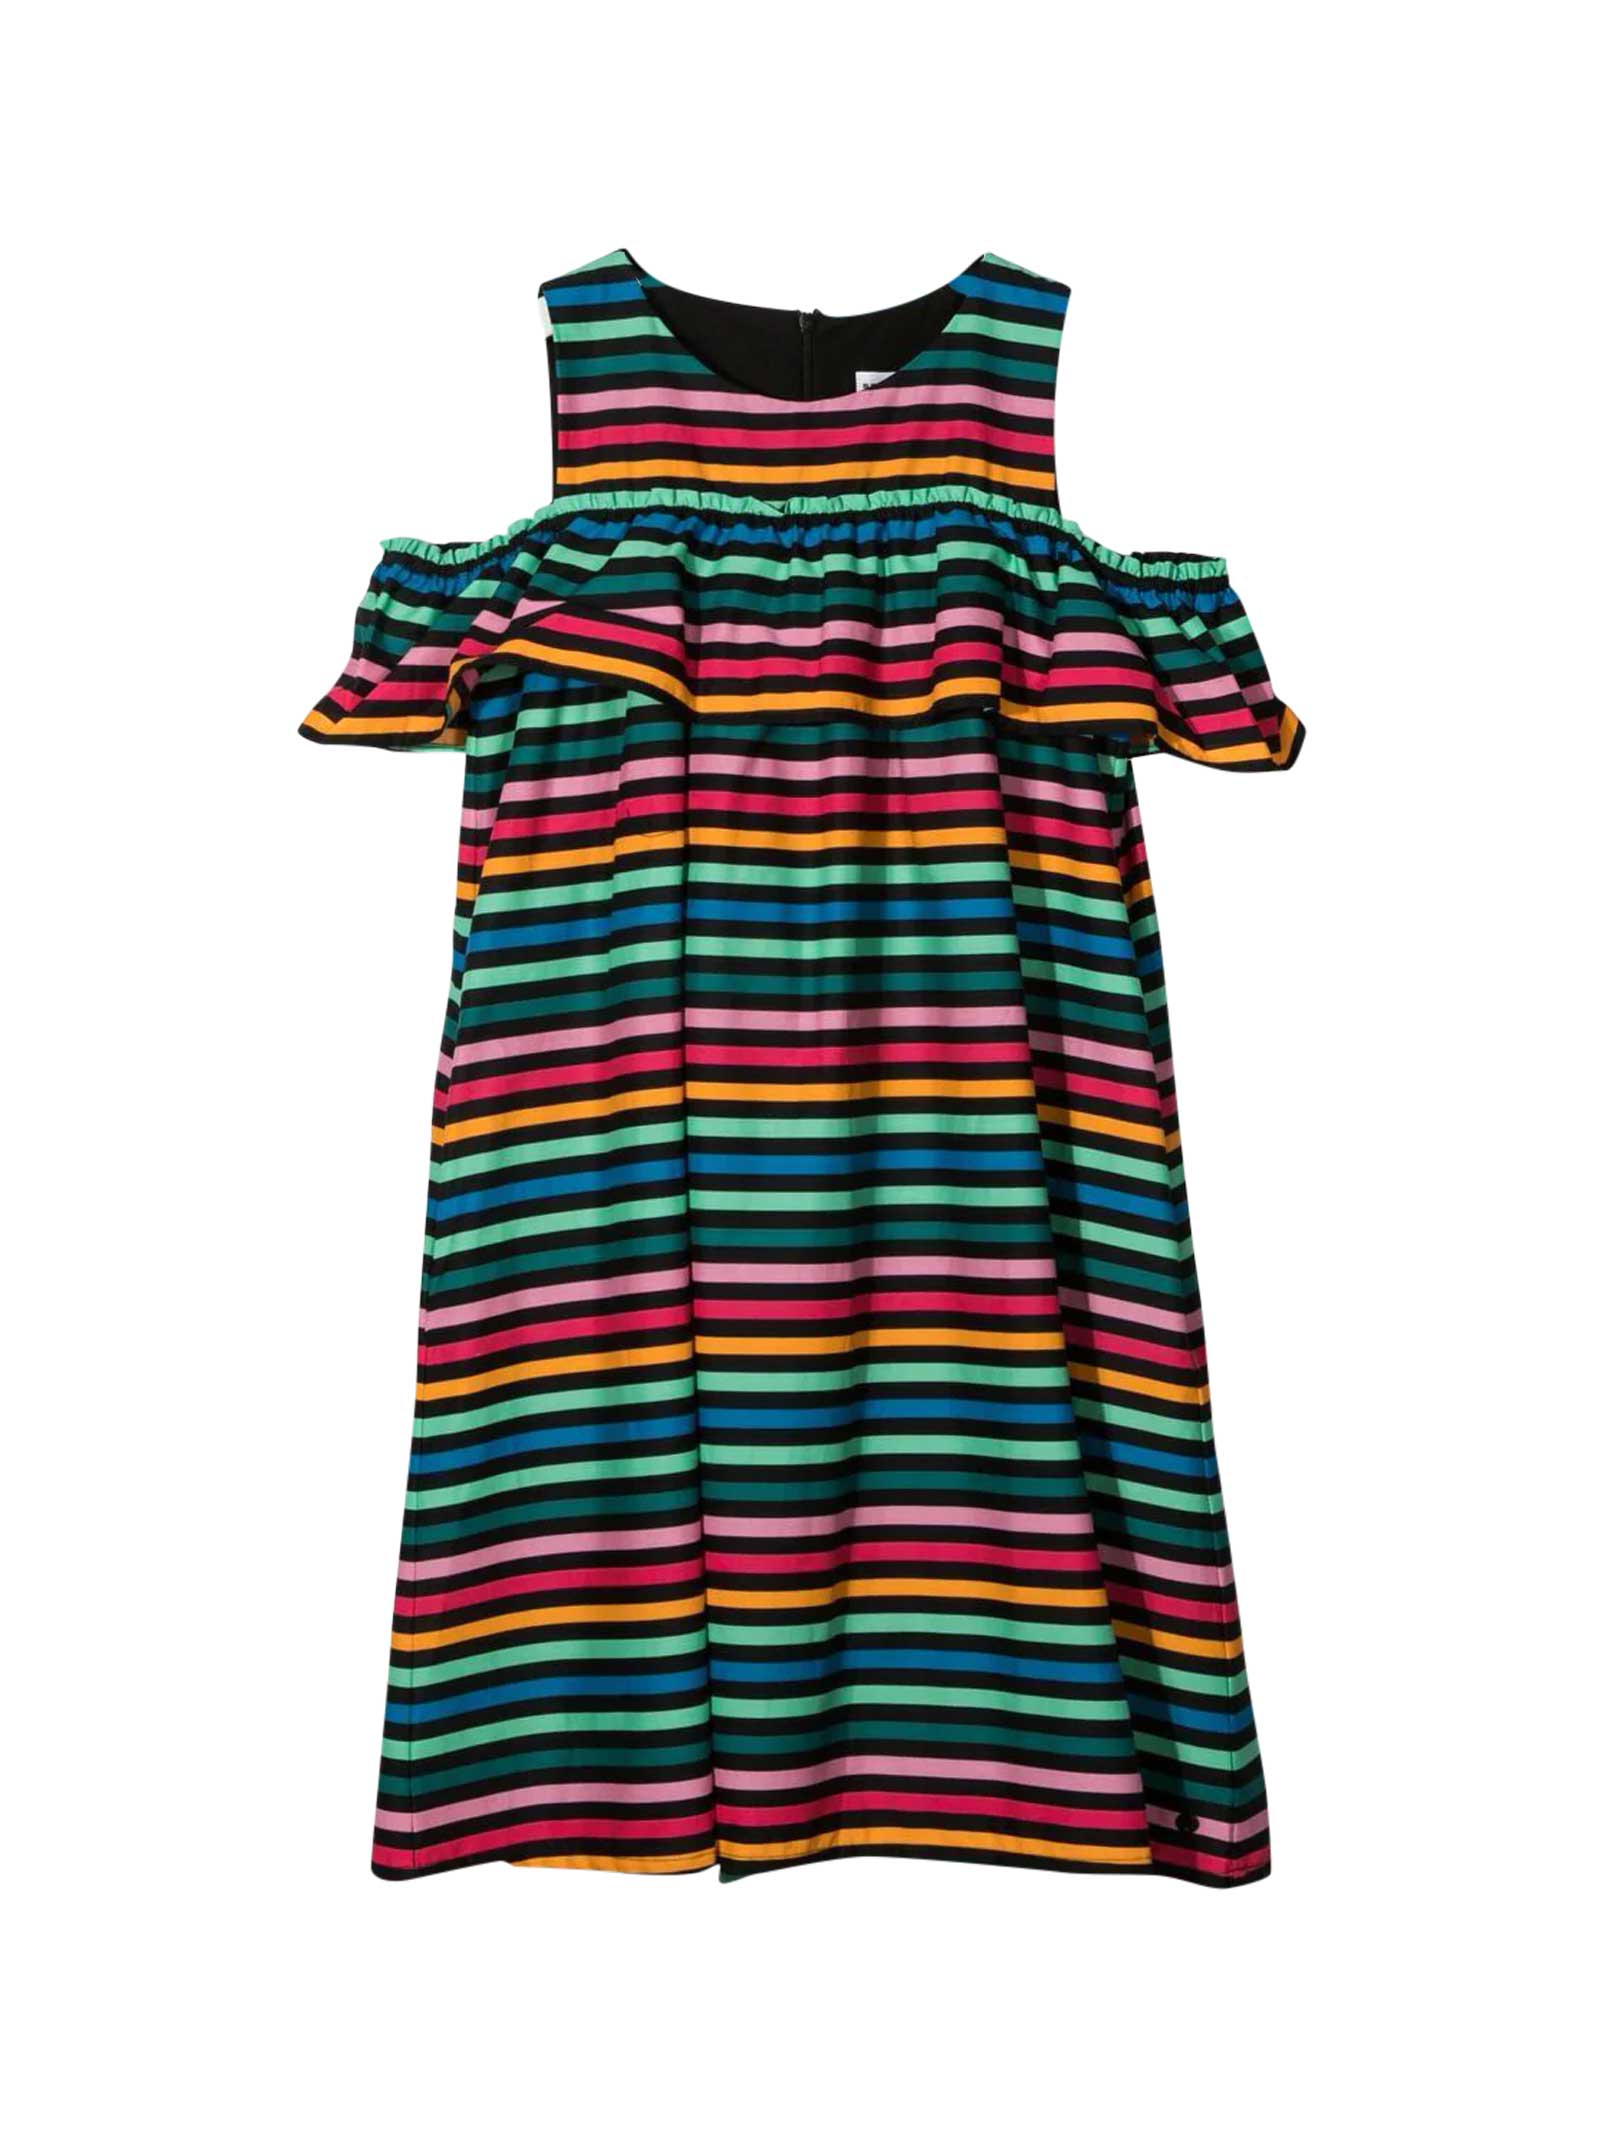 Sonia Rykiel Enfant Multicolored Striped Dress